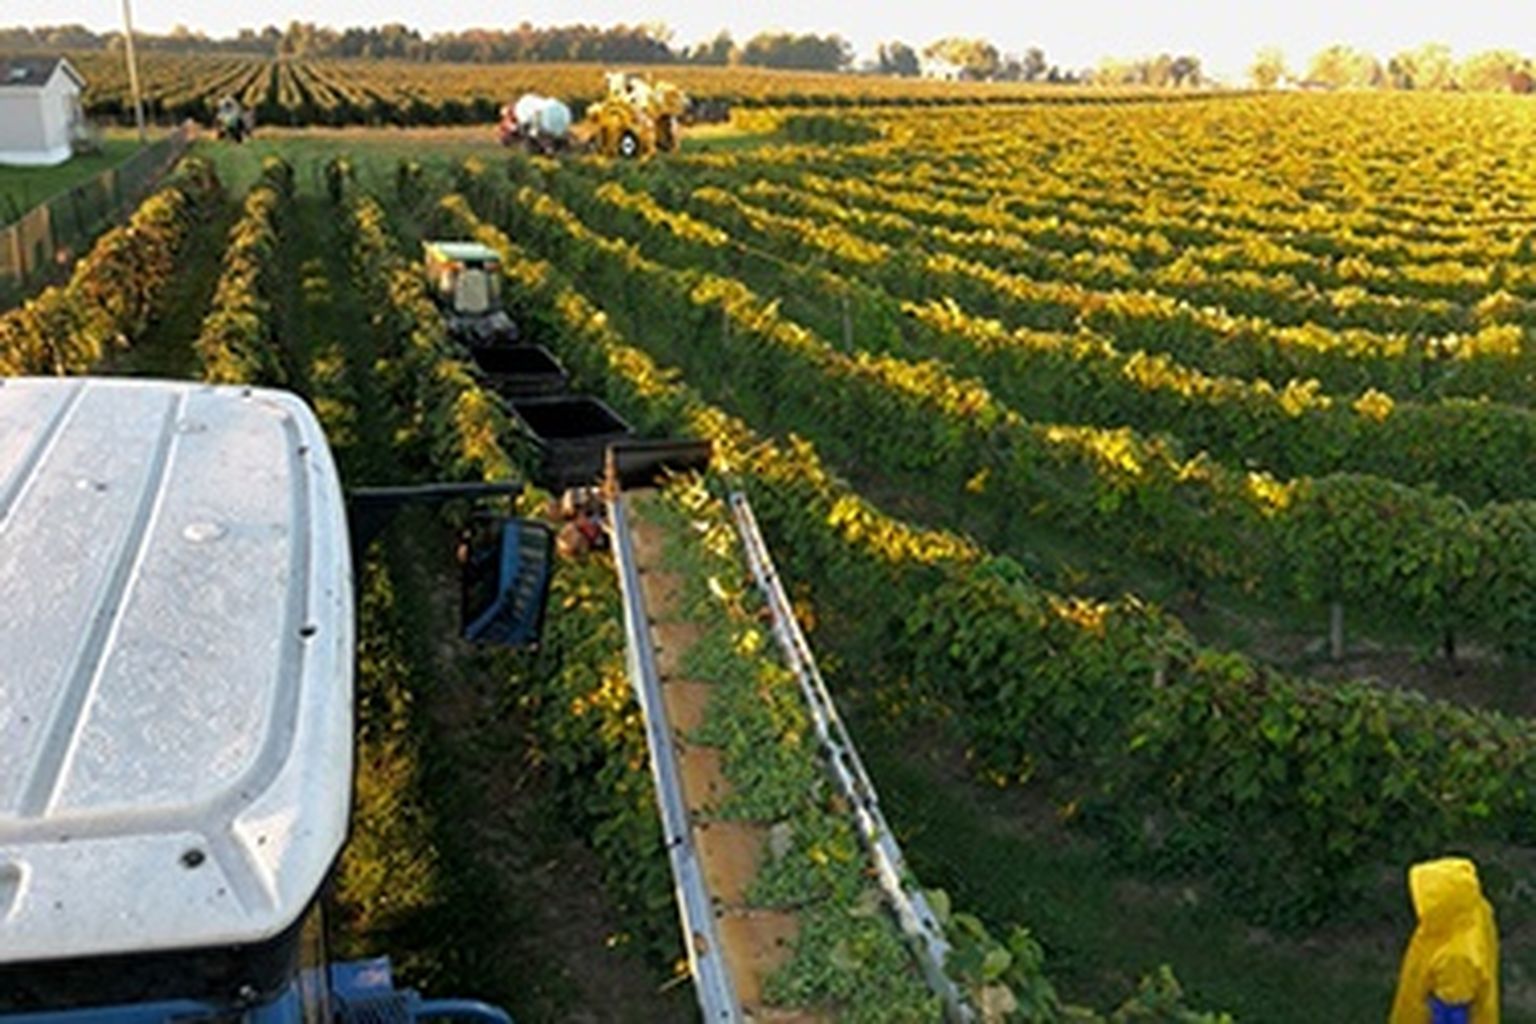 Fish-eye view of farmer driving tractor through a grape vineyard.